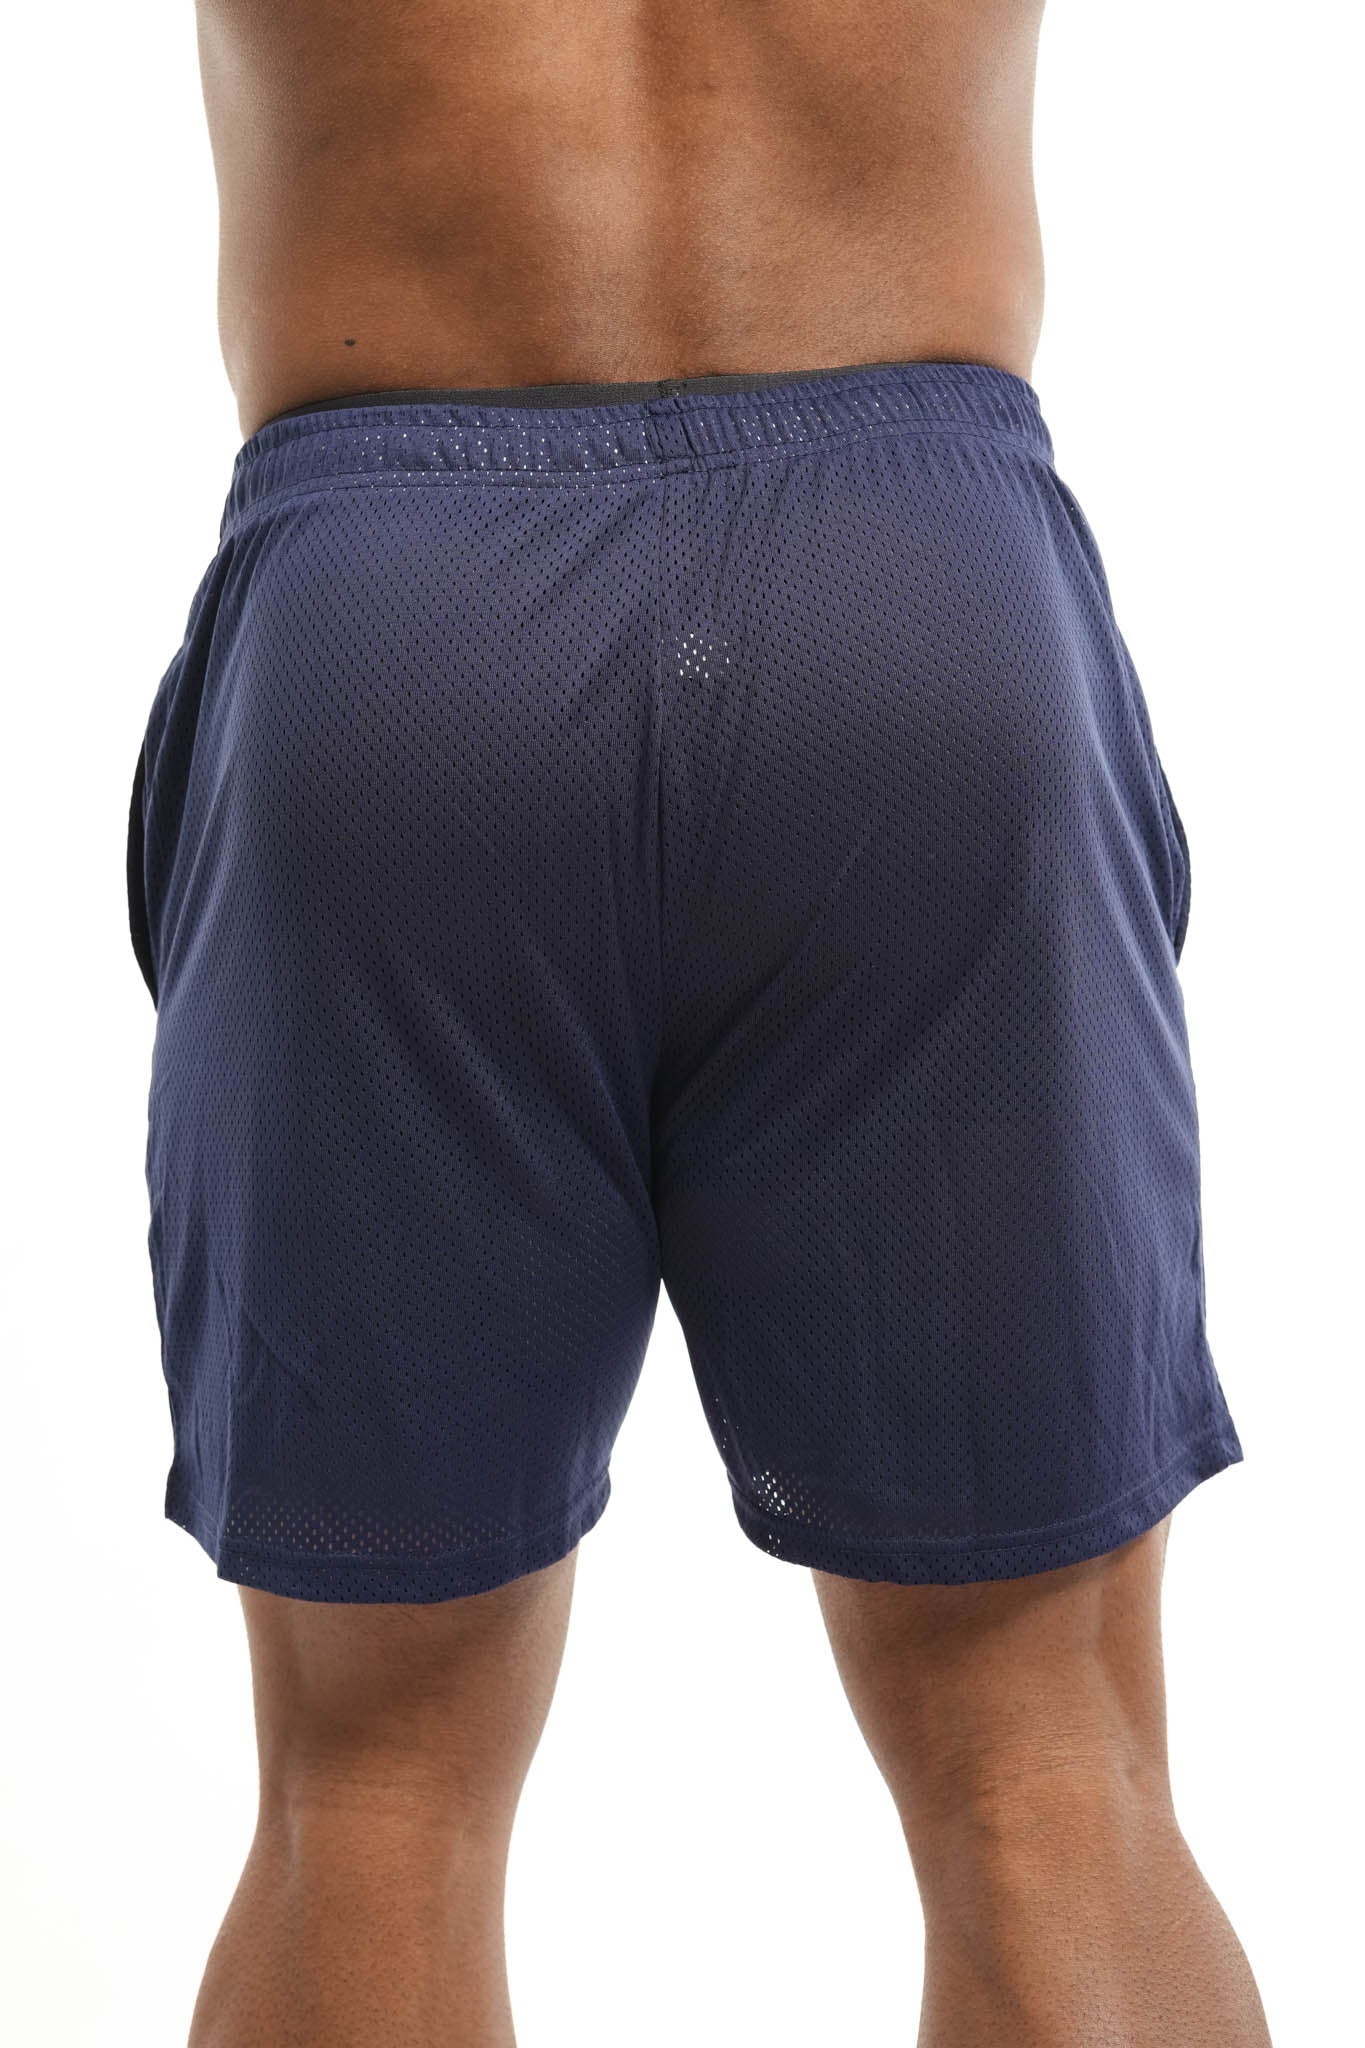 Astro Mesh Shorts - Unisex